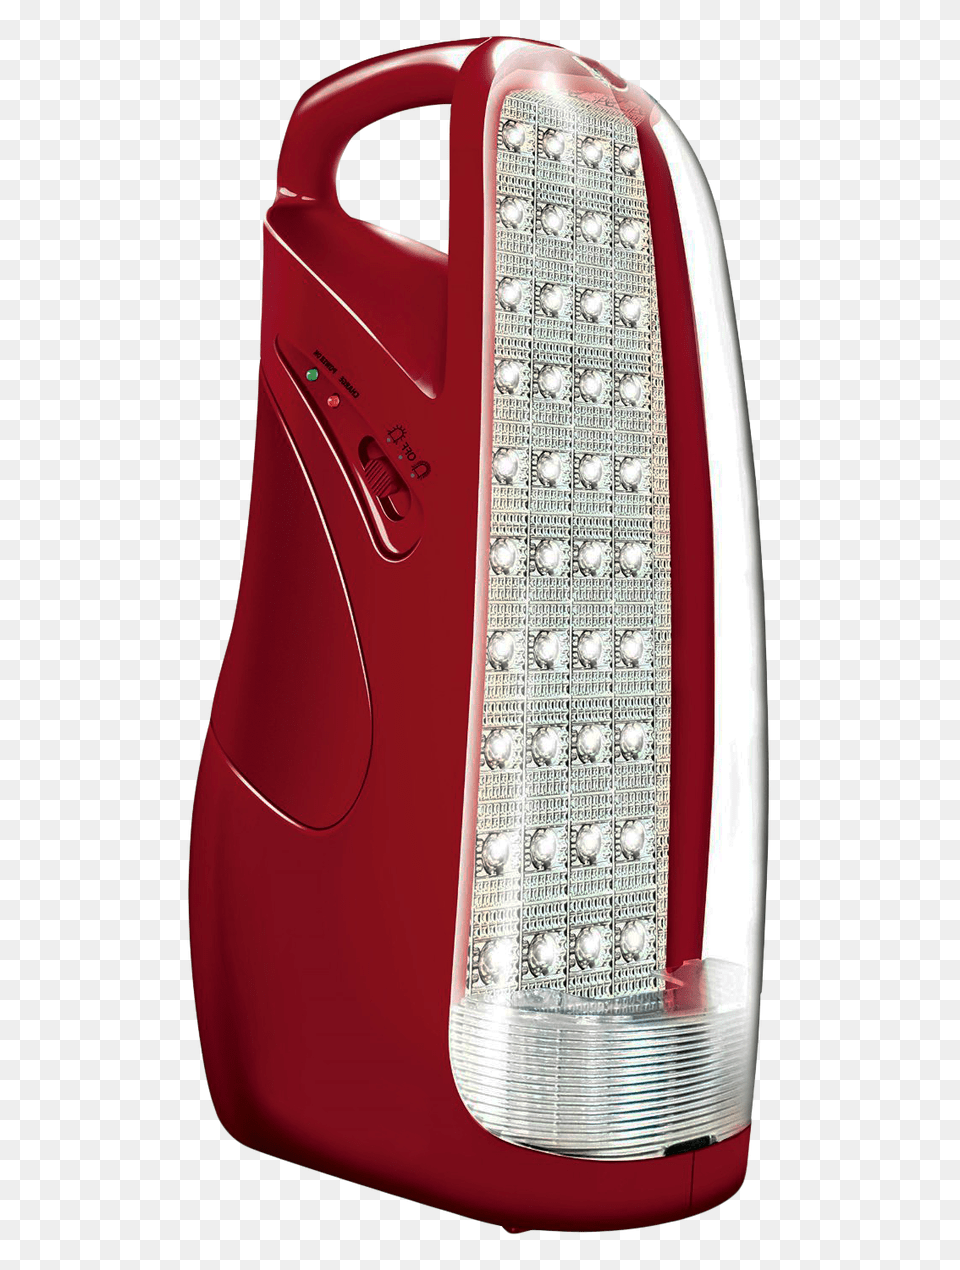 Pngpix Com Emerg Light Transparent, Electronics, Led, Lamp, Bottle Png Image